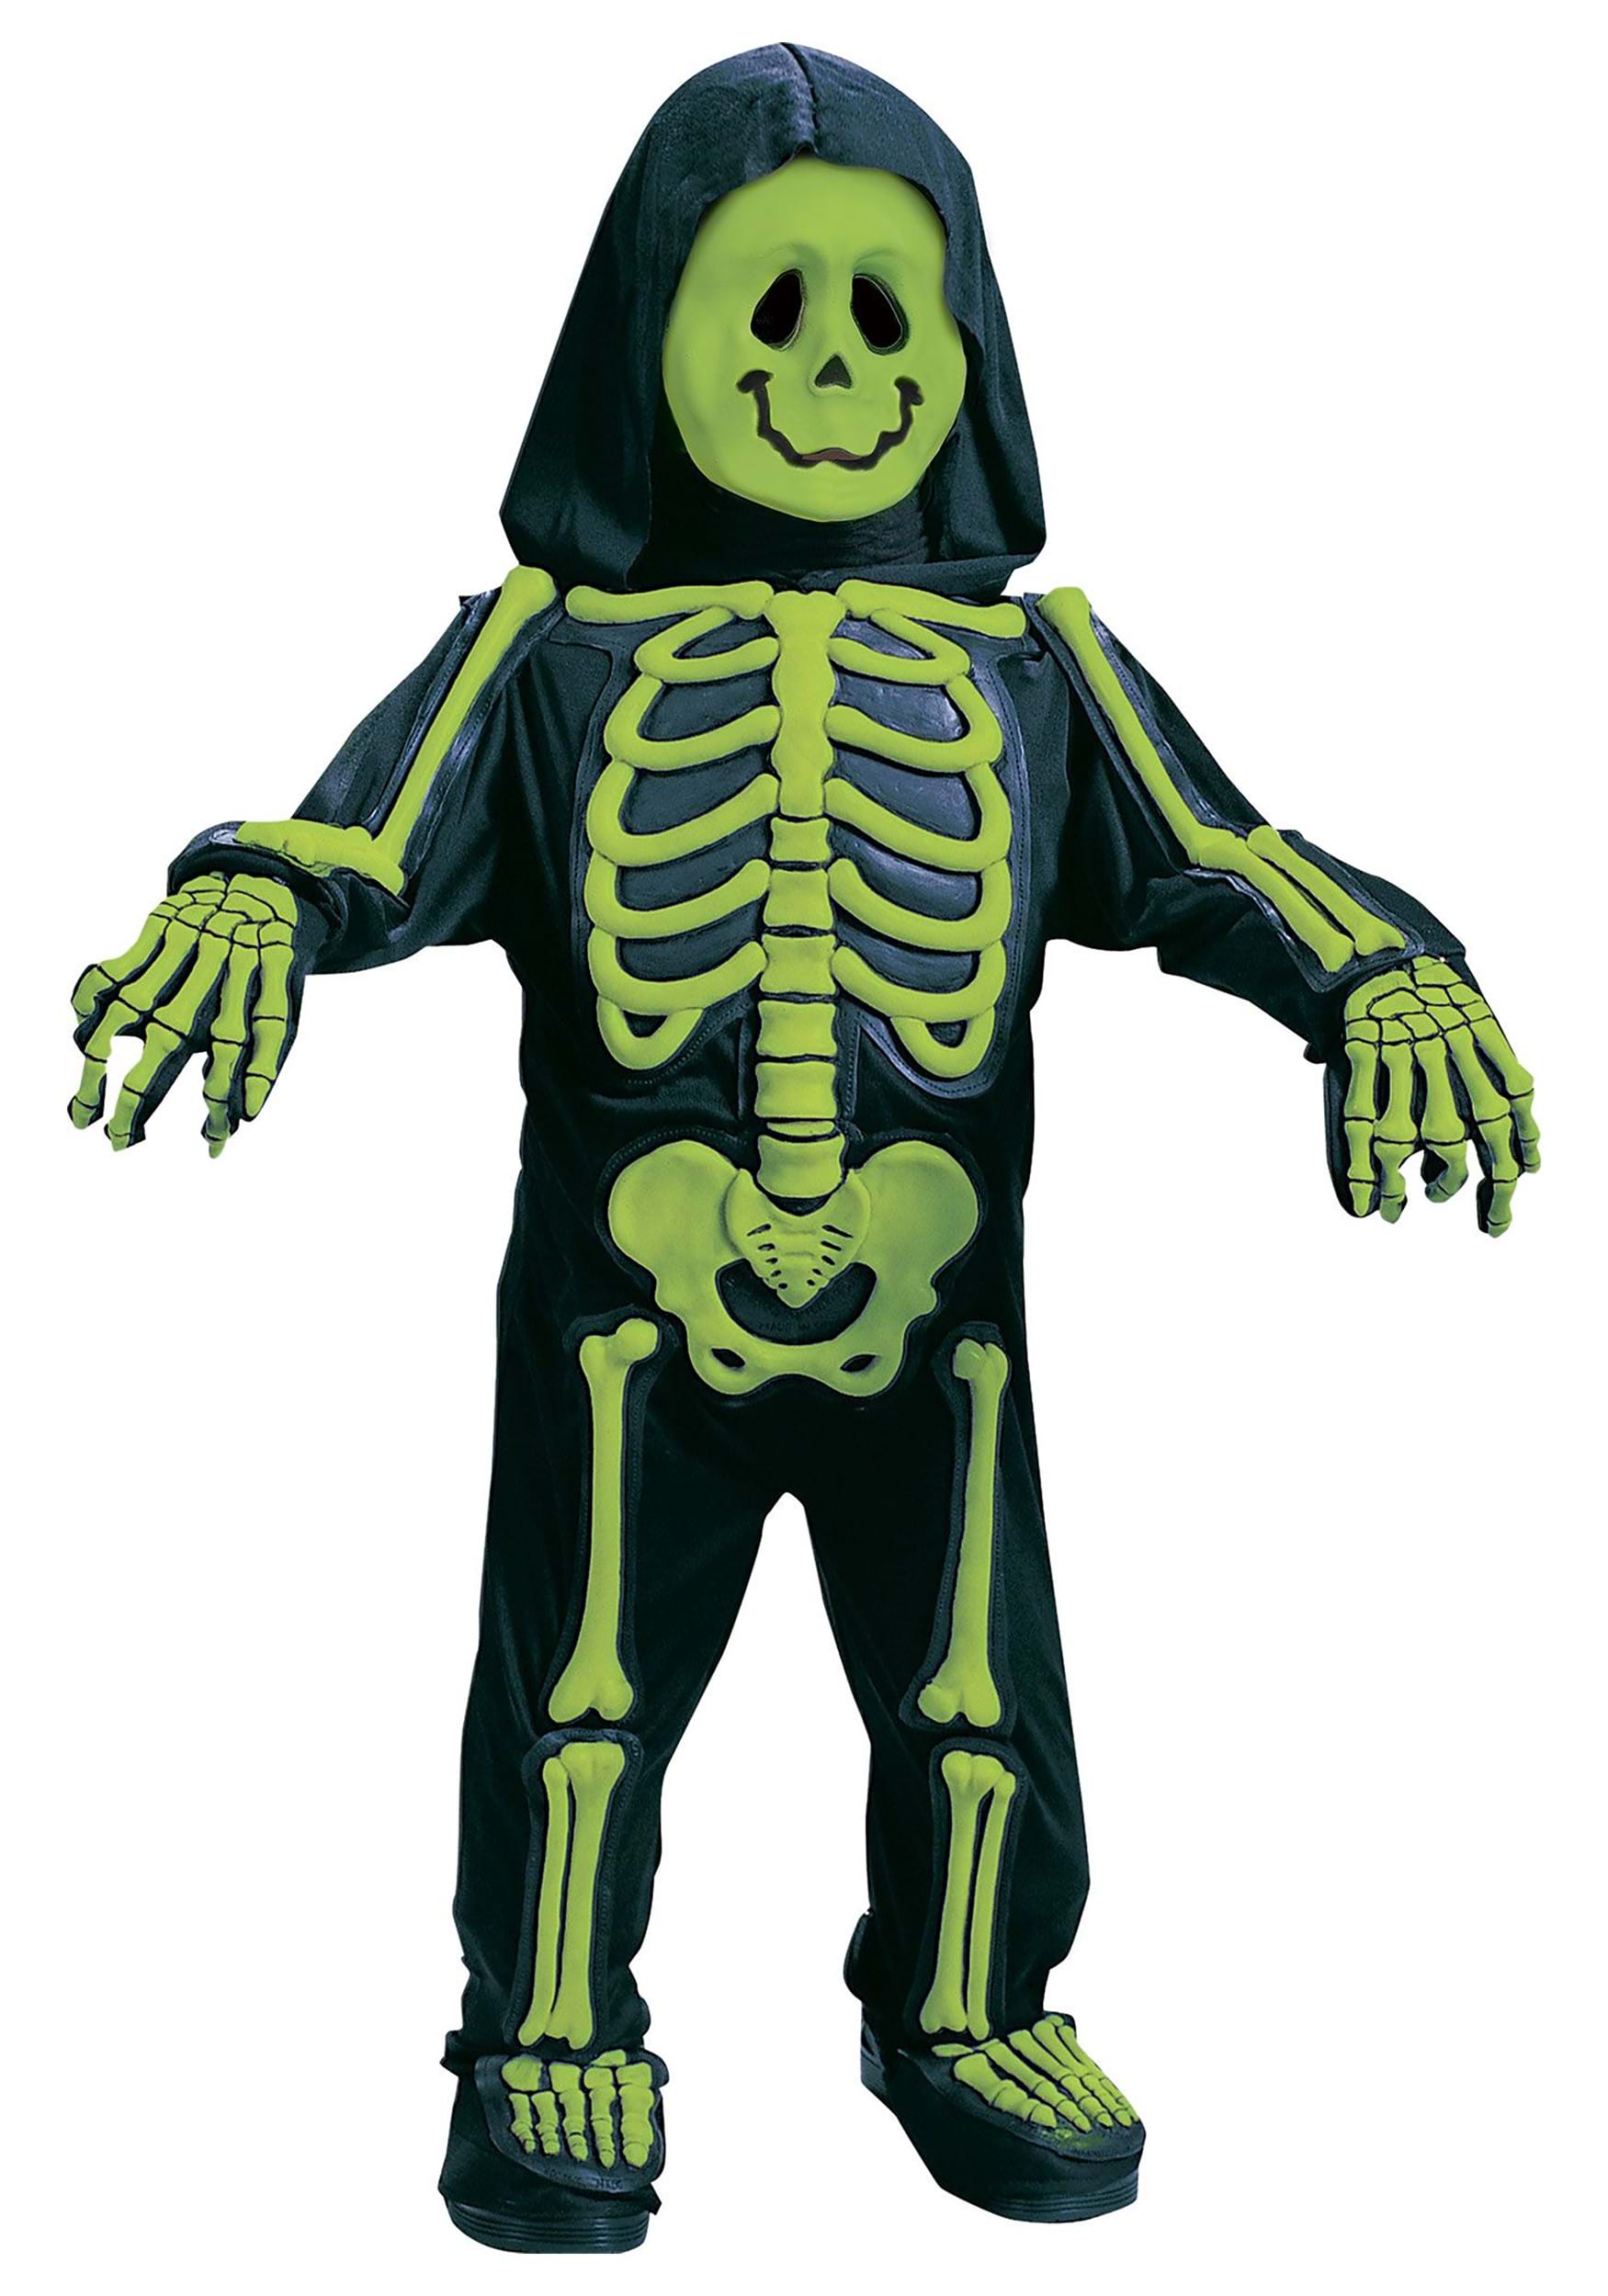 Photos - Fancy Dress Fun World Green Skeleton Costume for Toddlers Black/Green FU1523G